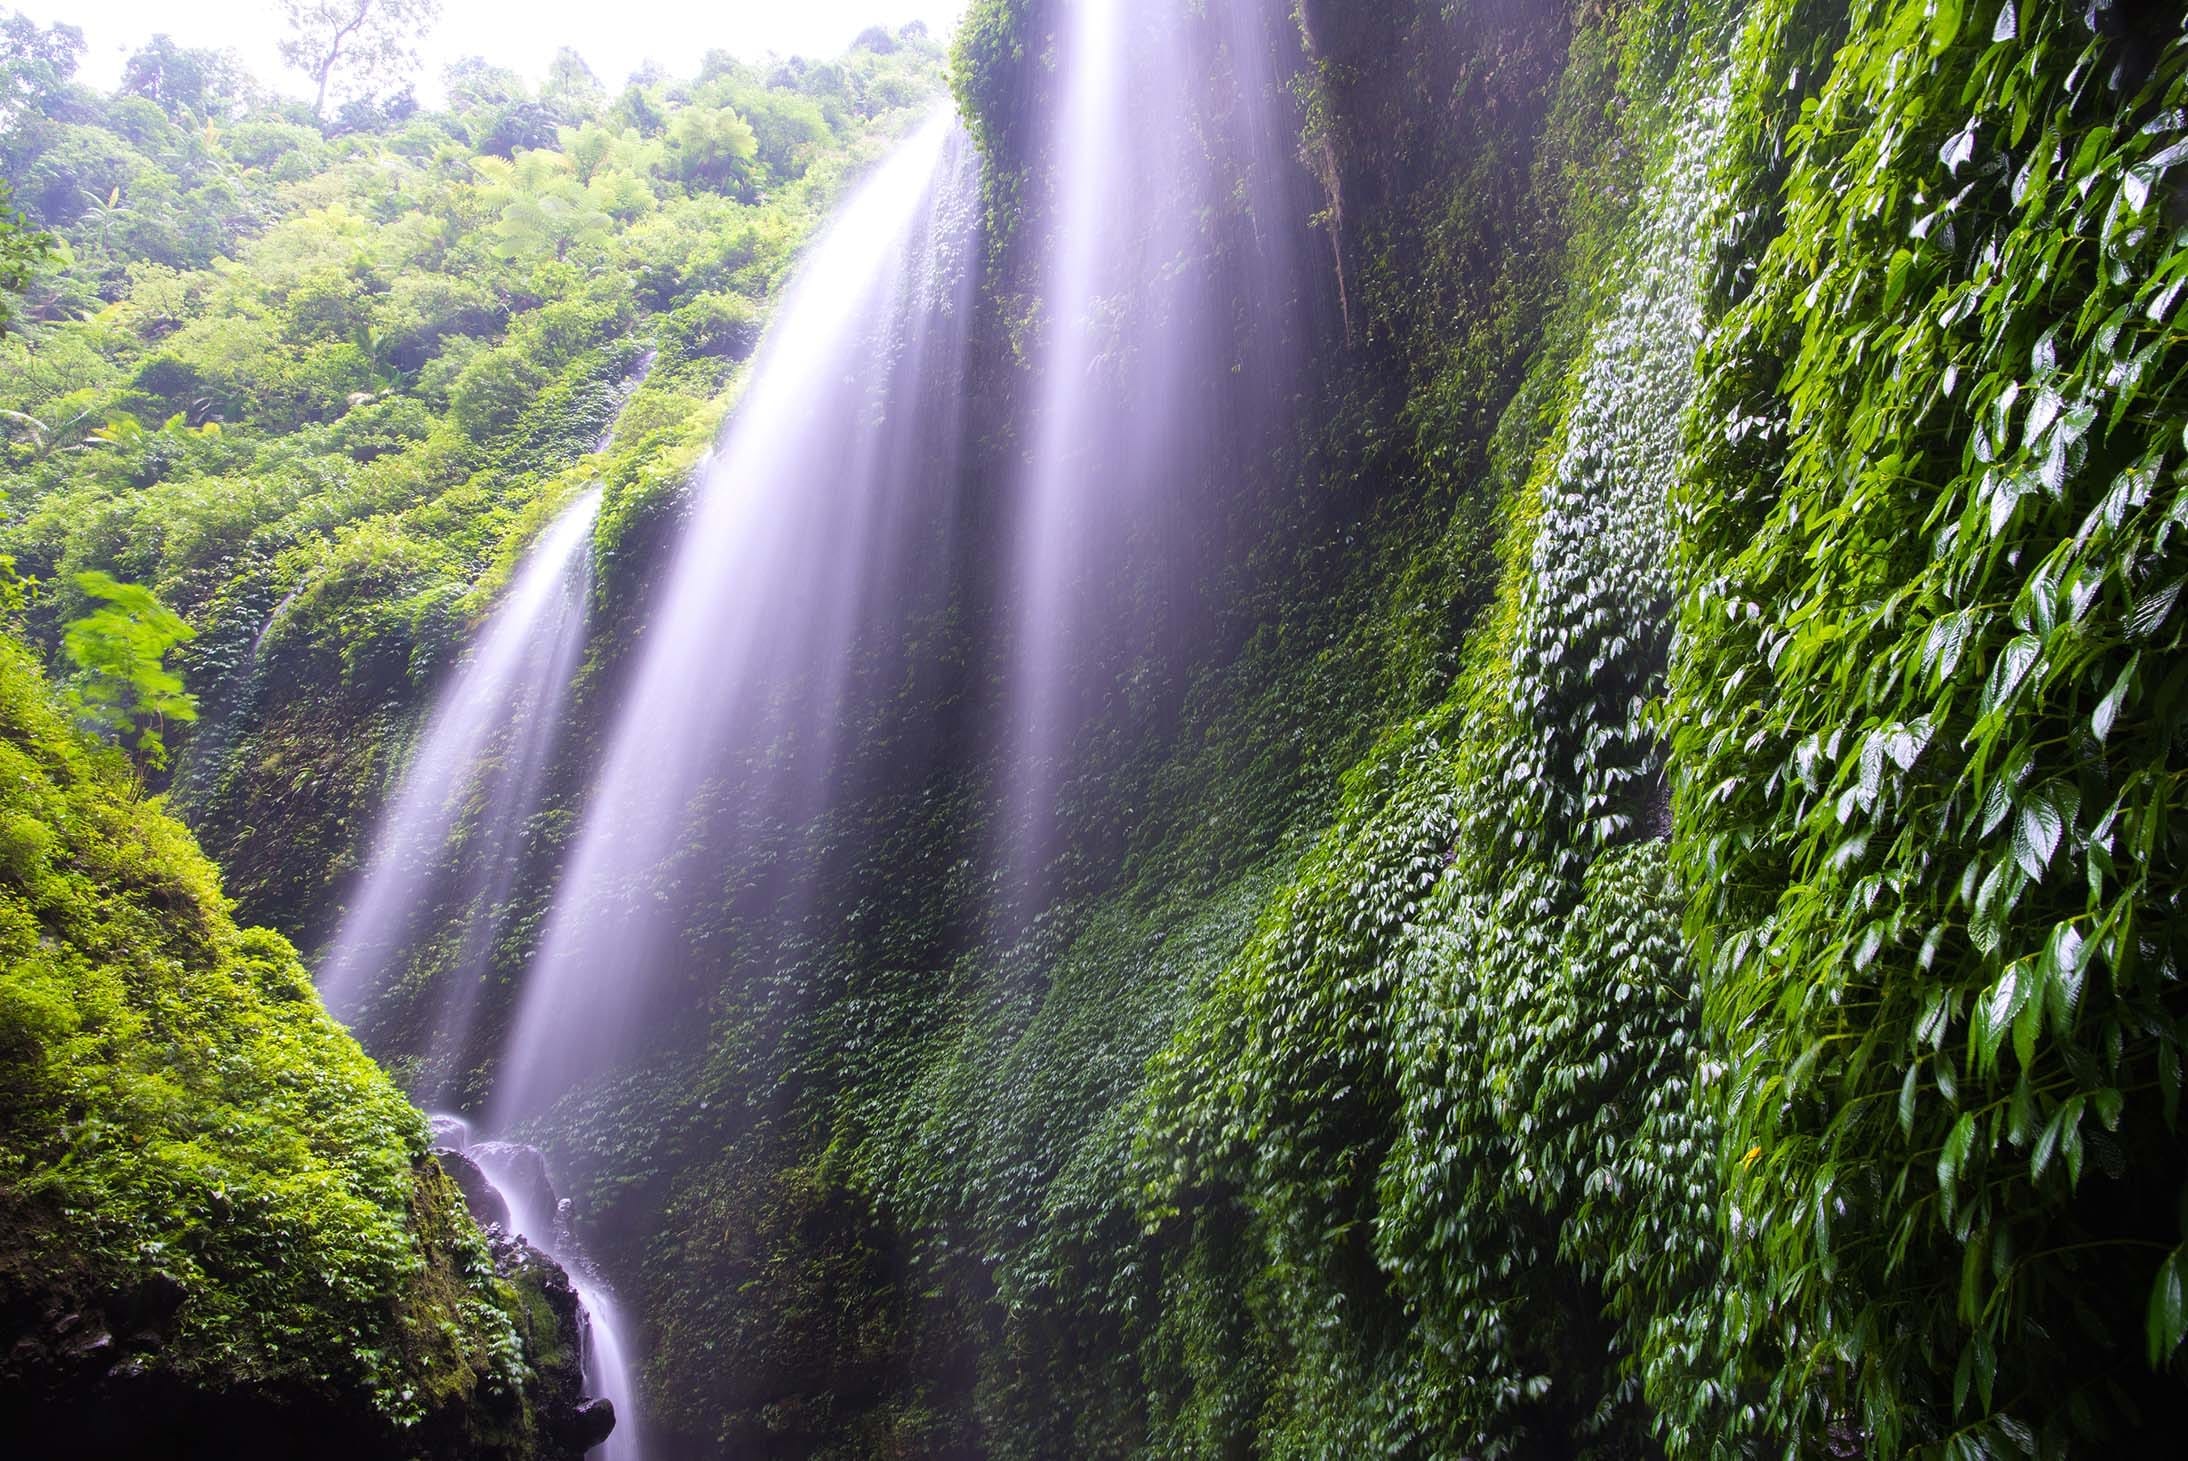 Madakaripura Waterfall: Majapahit Kingdom Vestige